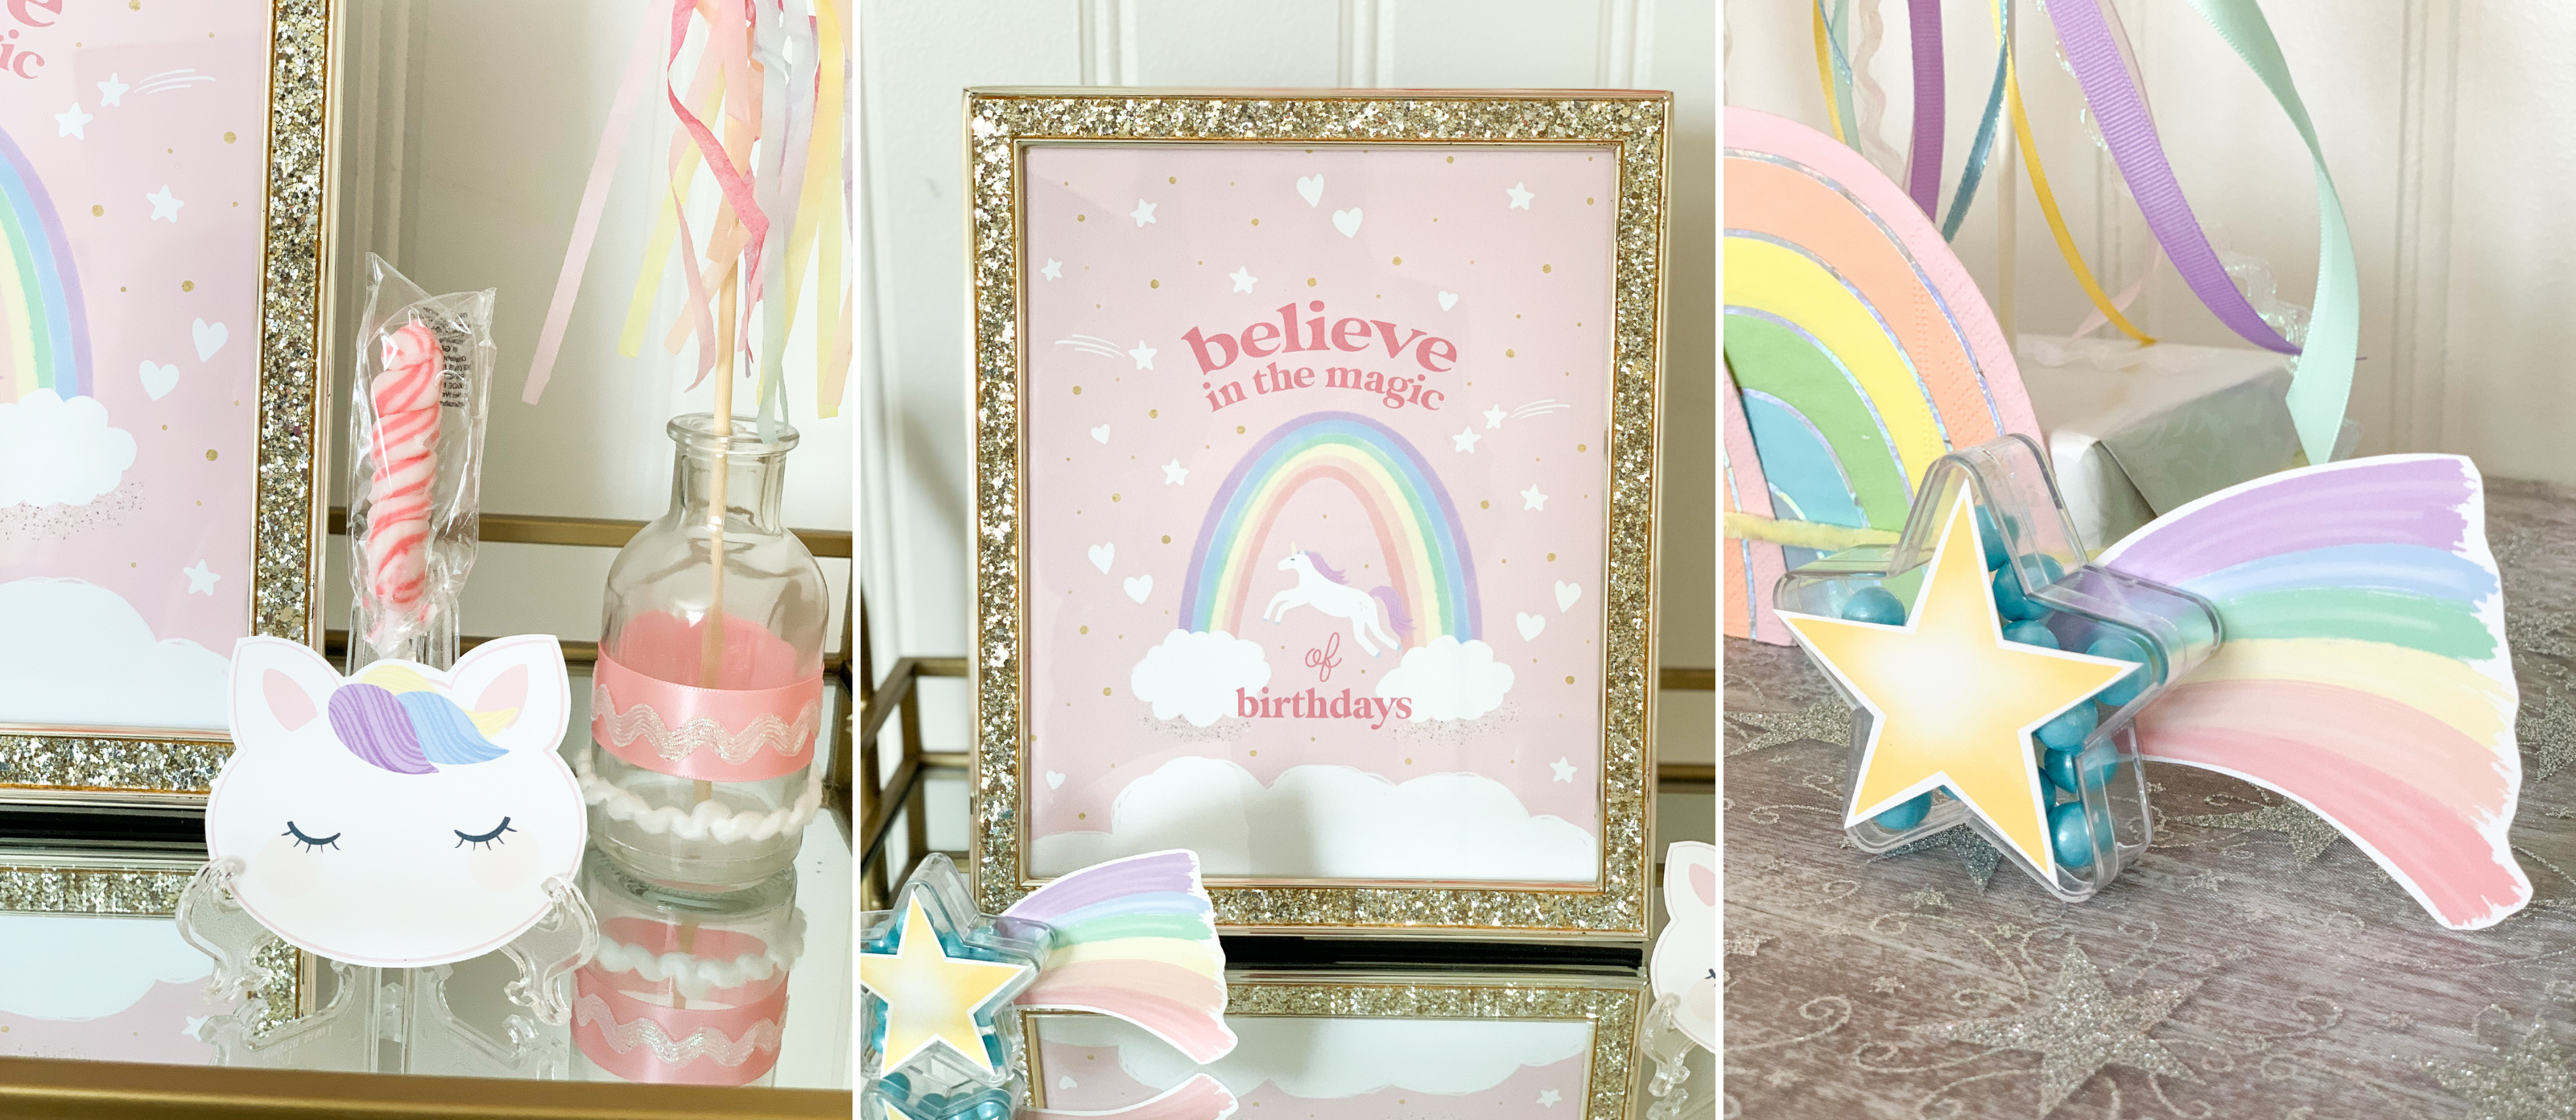 Unicorn Themed Birthday Party Ideas